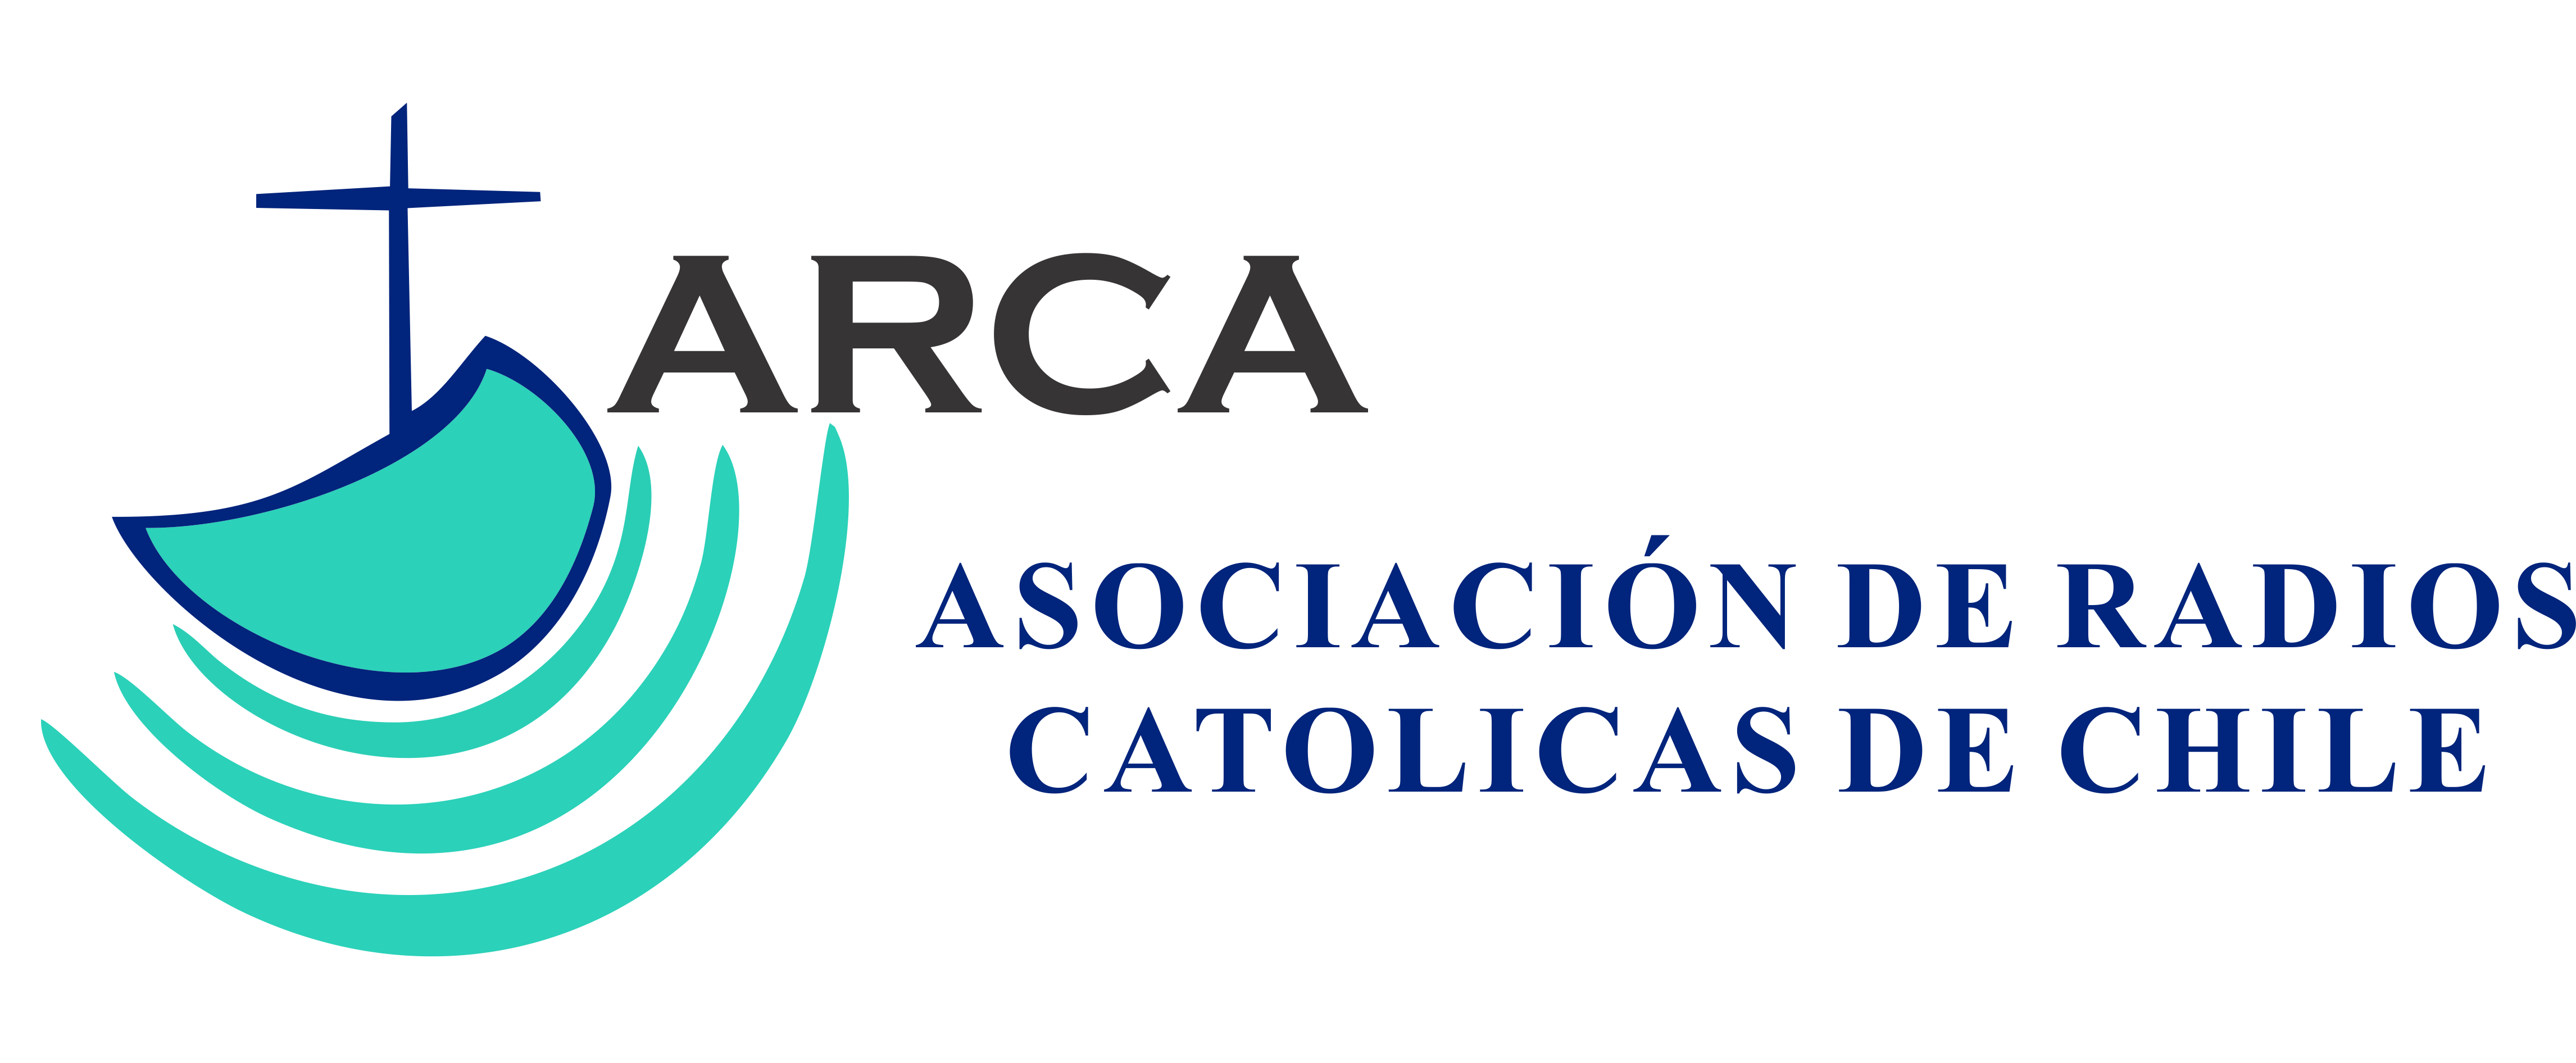 Asociación de Radios Católicas de Chile realizará Asamblea Nacional luego de 3 años